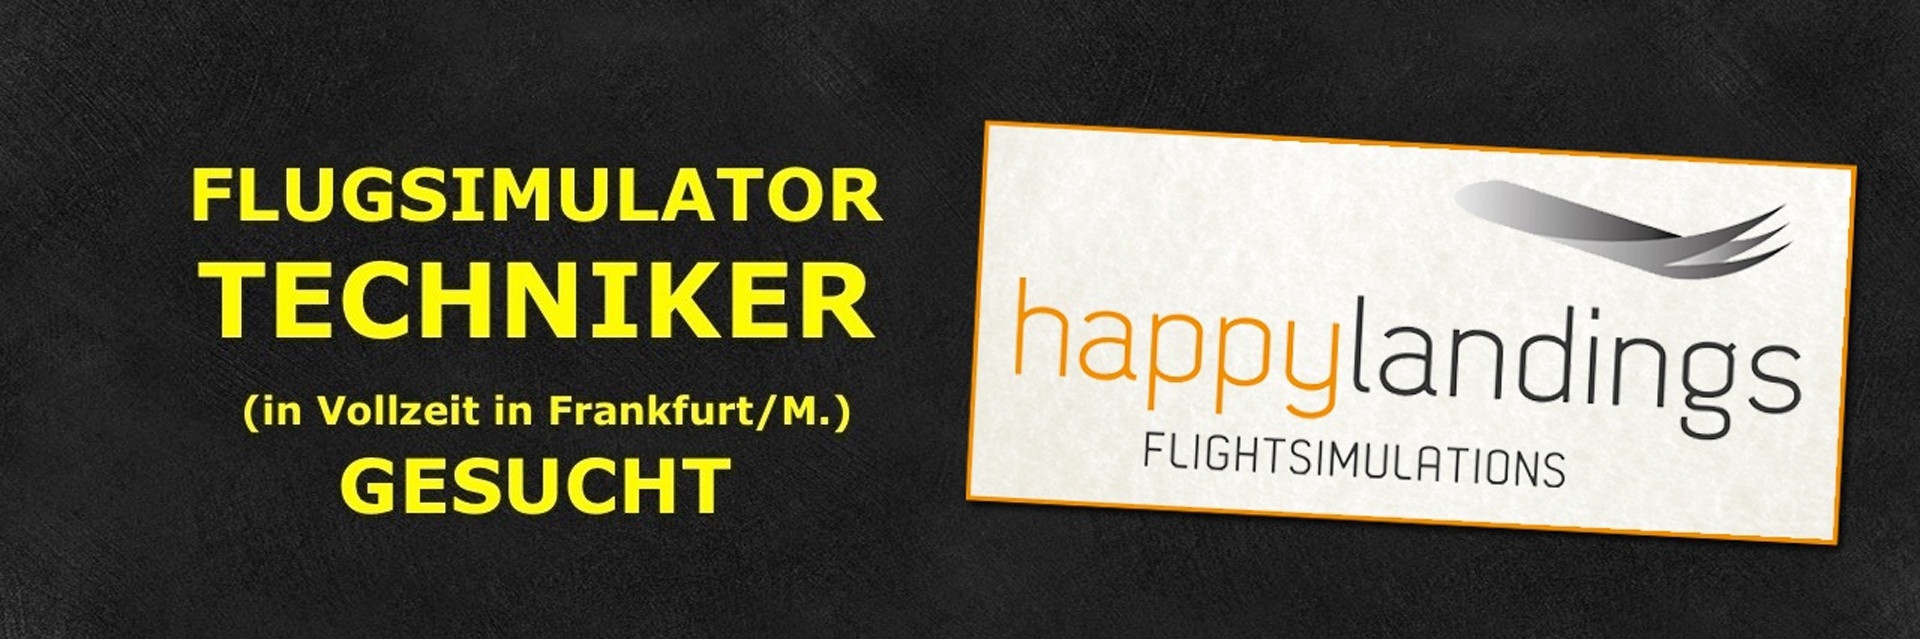 HappyLandings sucht Flugsimulator-Techniker